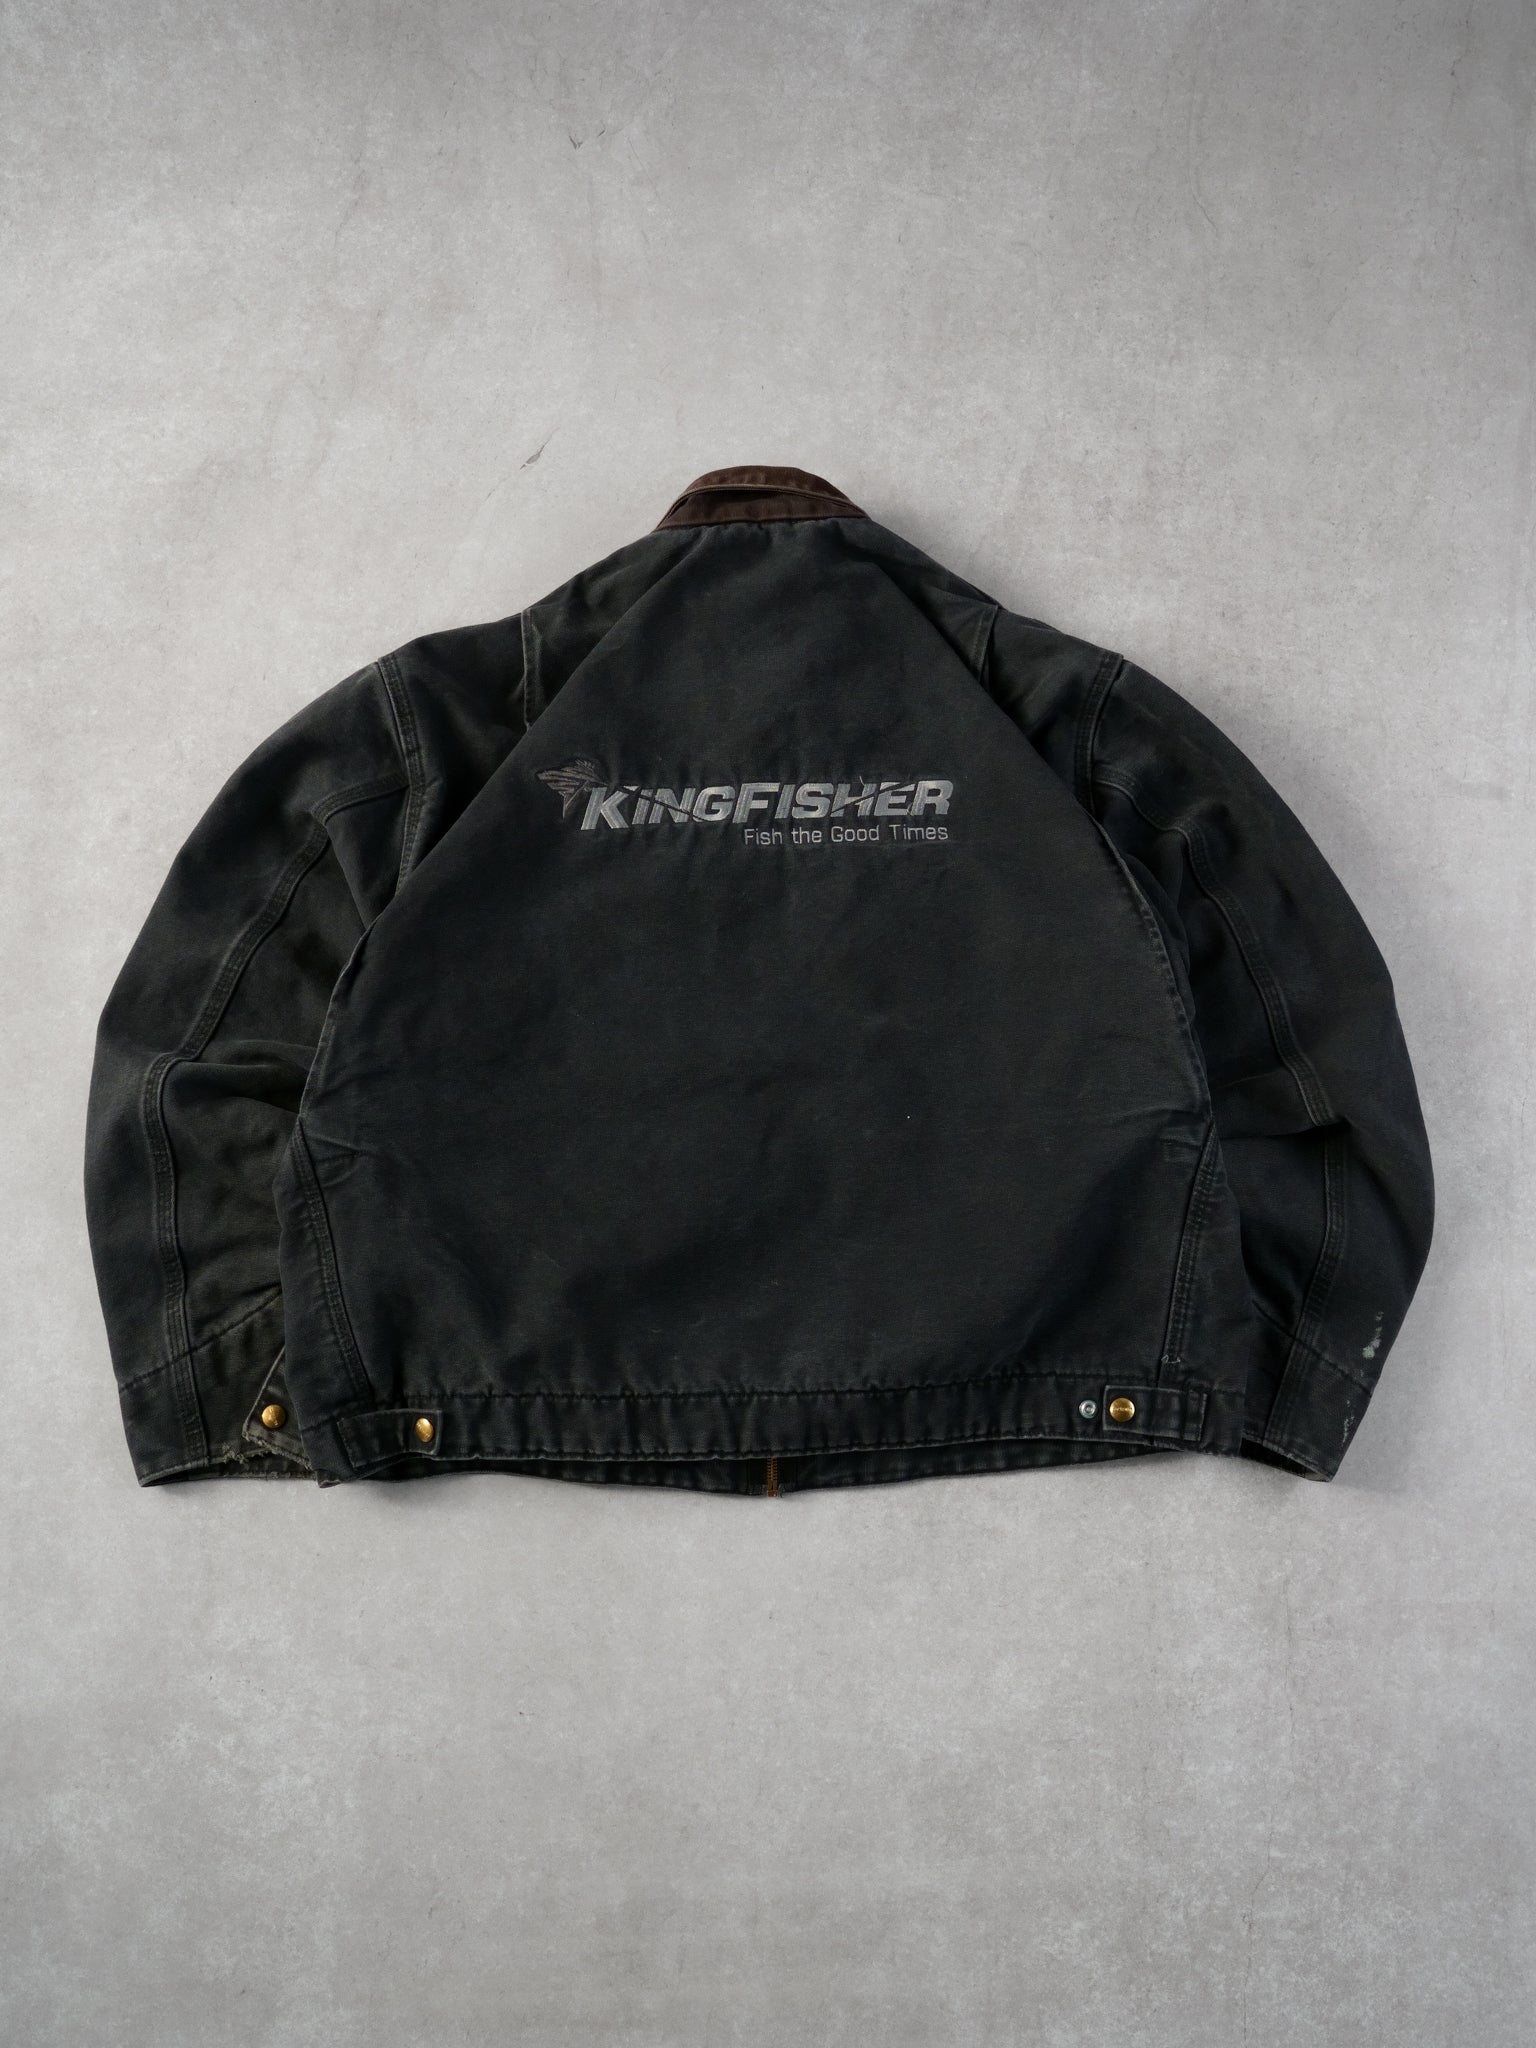 Vintage 90s Dark Grey and Brown Carhartt King Fisher Detroit Workwear Jacket (L)